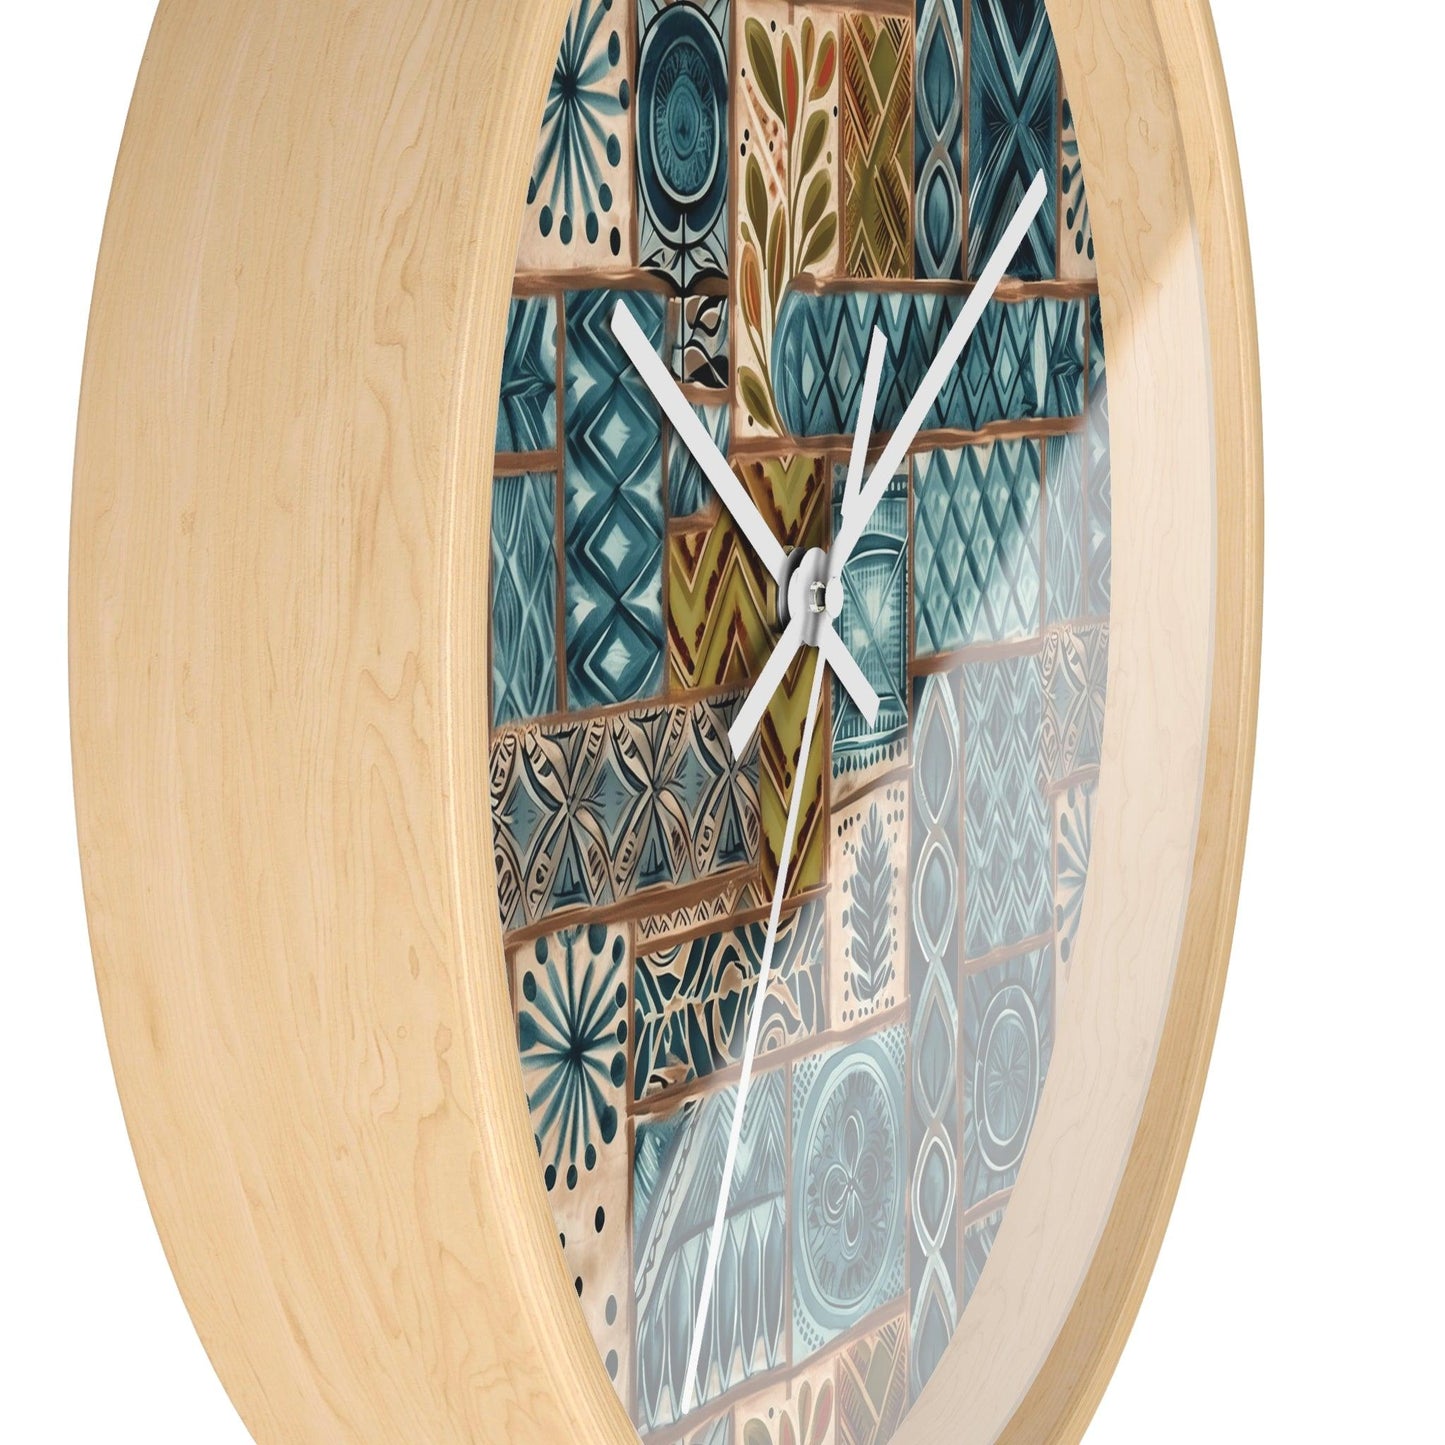 Pacific Islands Tapa Cloth Wall Clock - The Global Wanderer